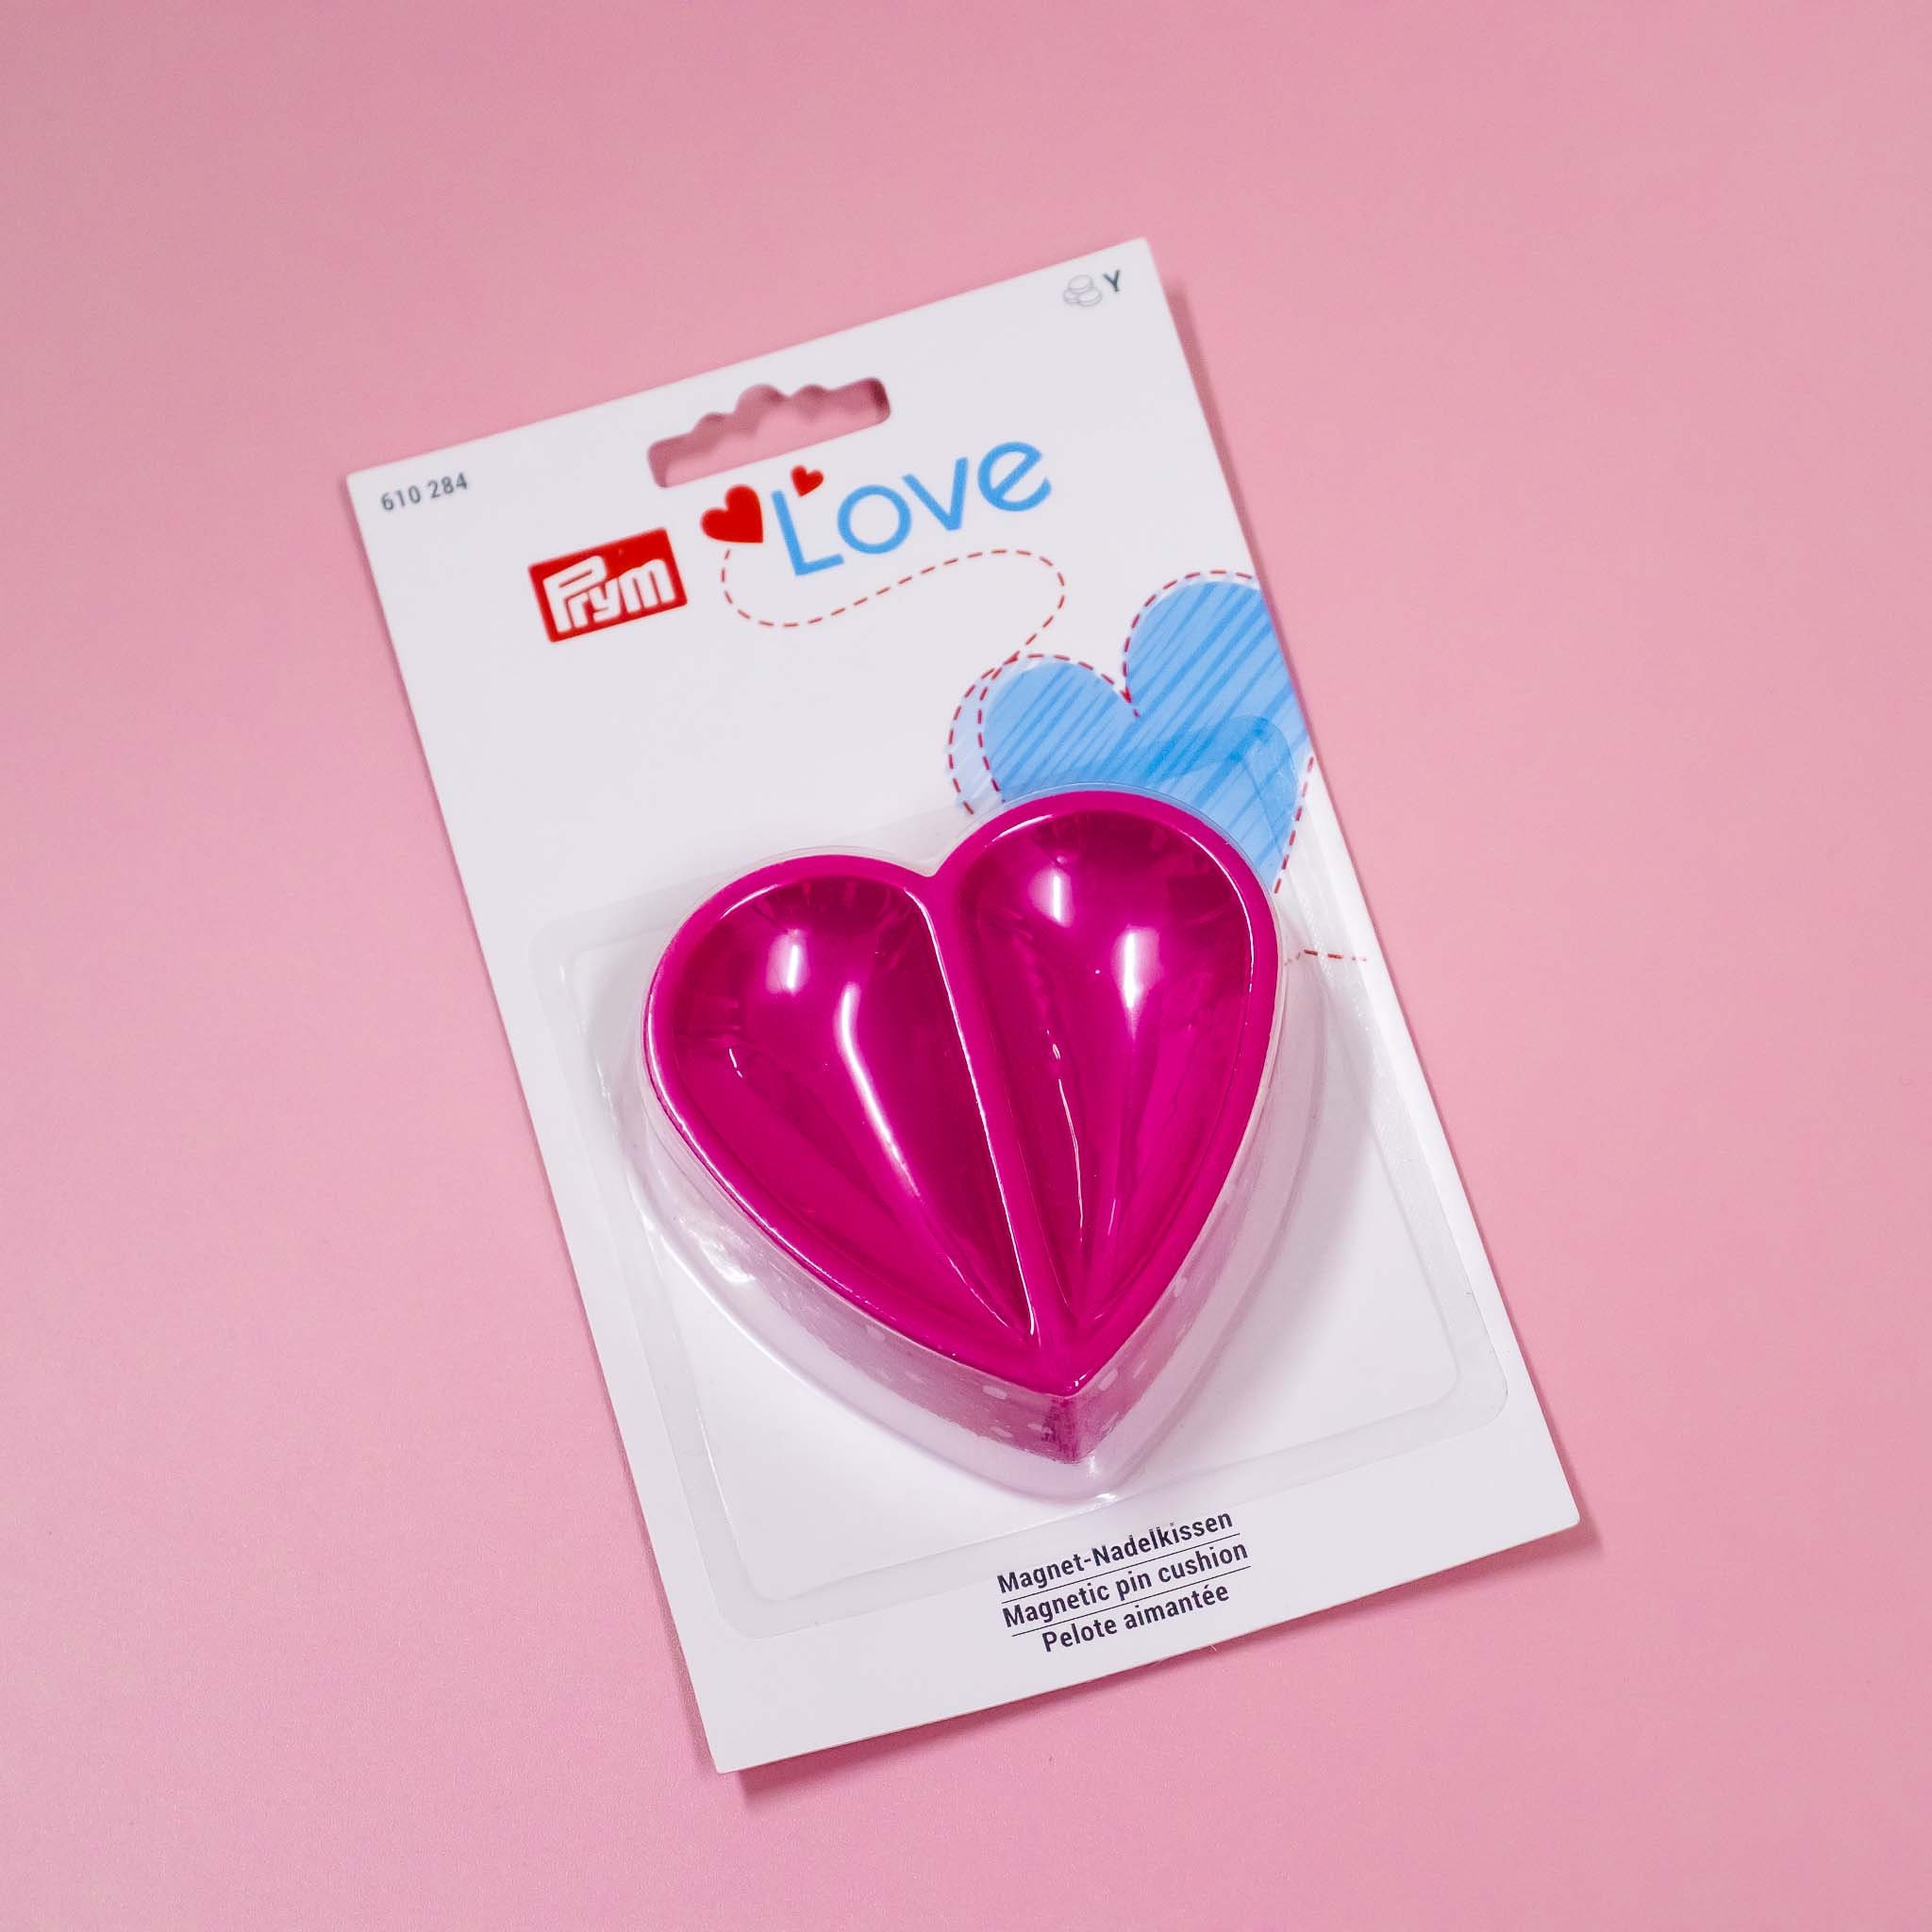 Prym Love Magnetic Heart Pin Cushion